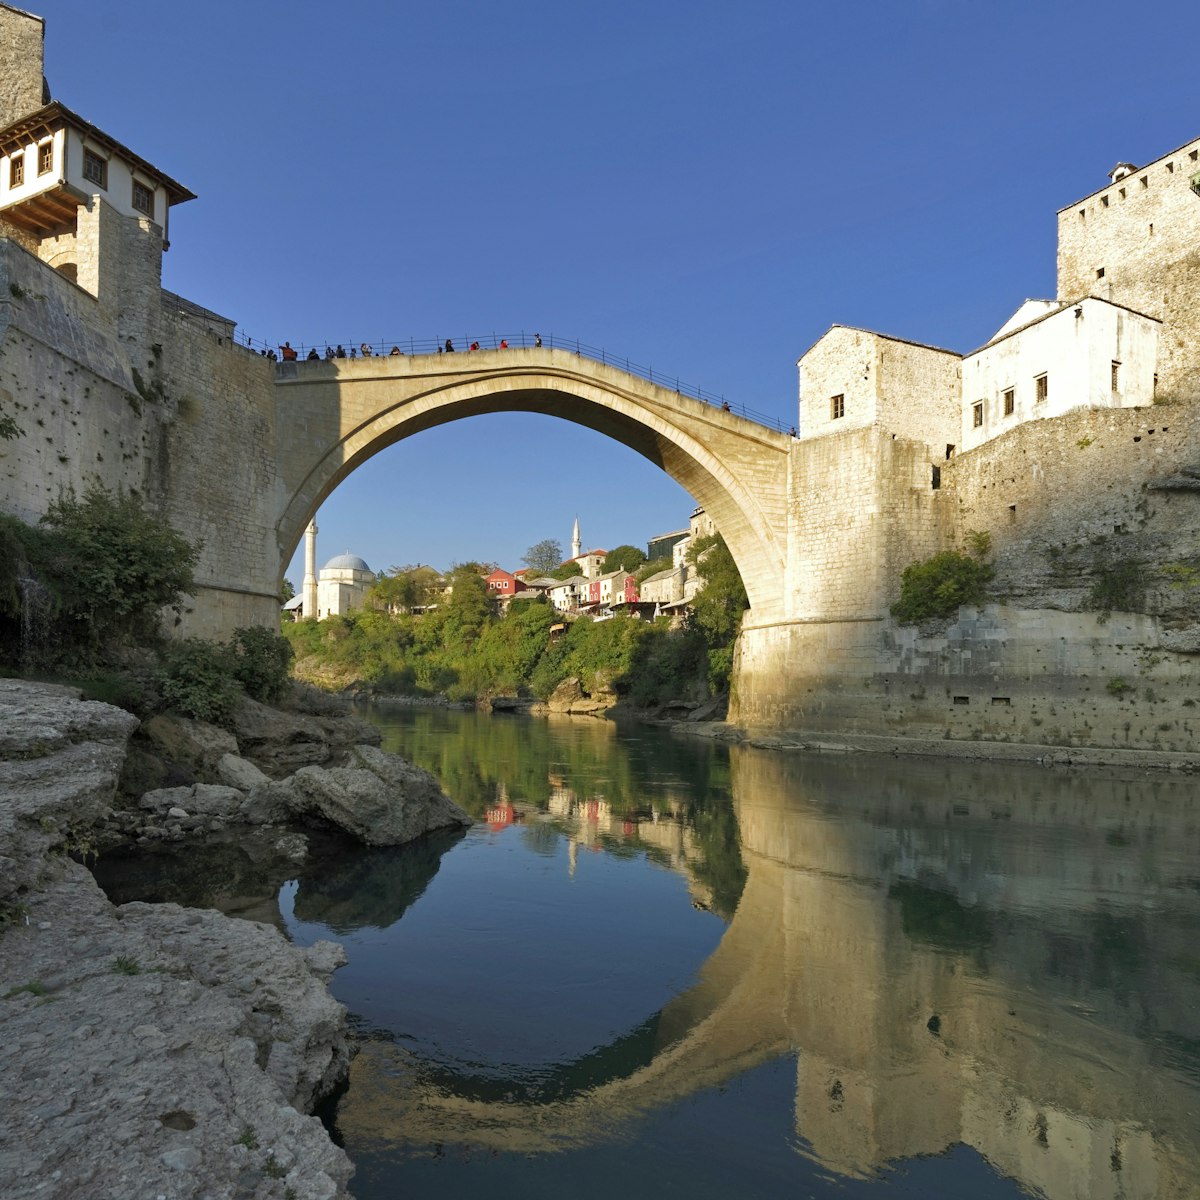 Bosnia and Herzegovina, Mostar, Old Bridge